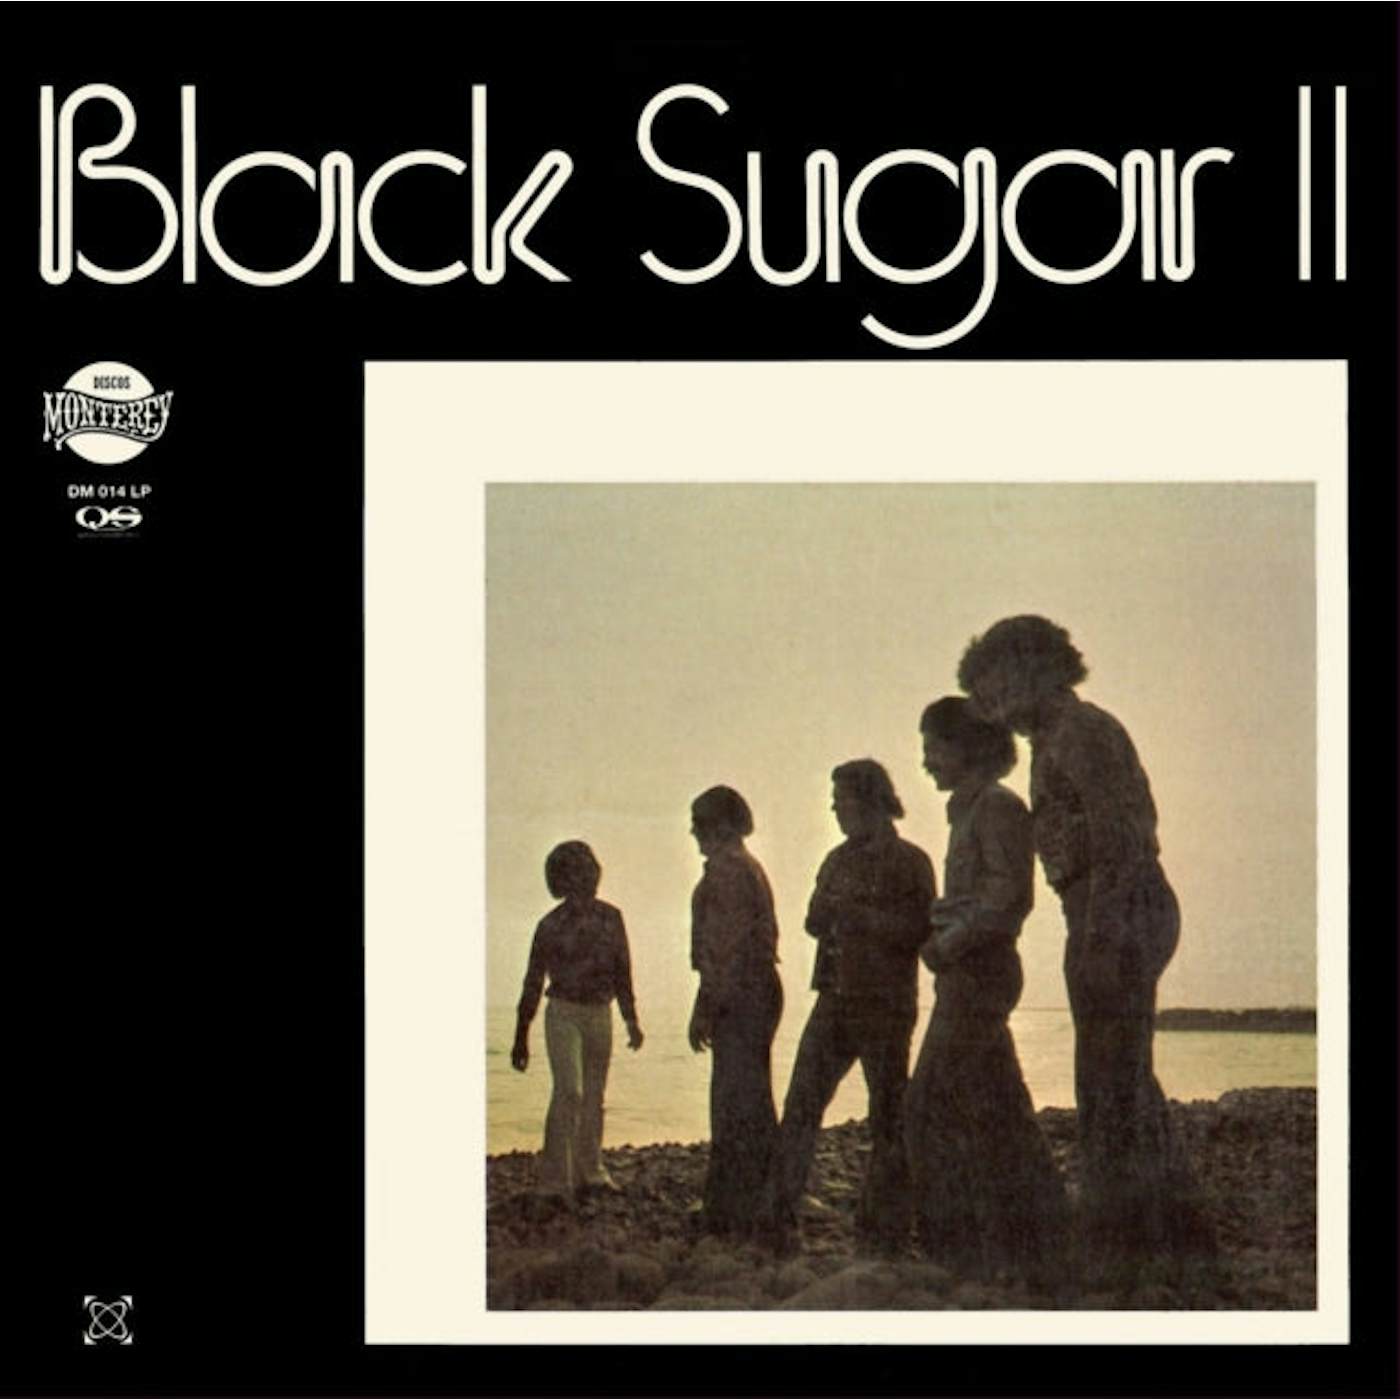 Black Sugar LP - Black Sugar Ii (Vinyl)